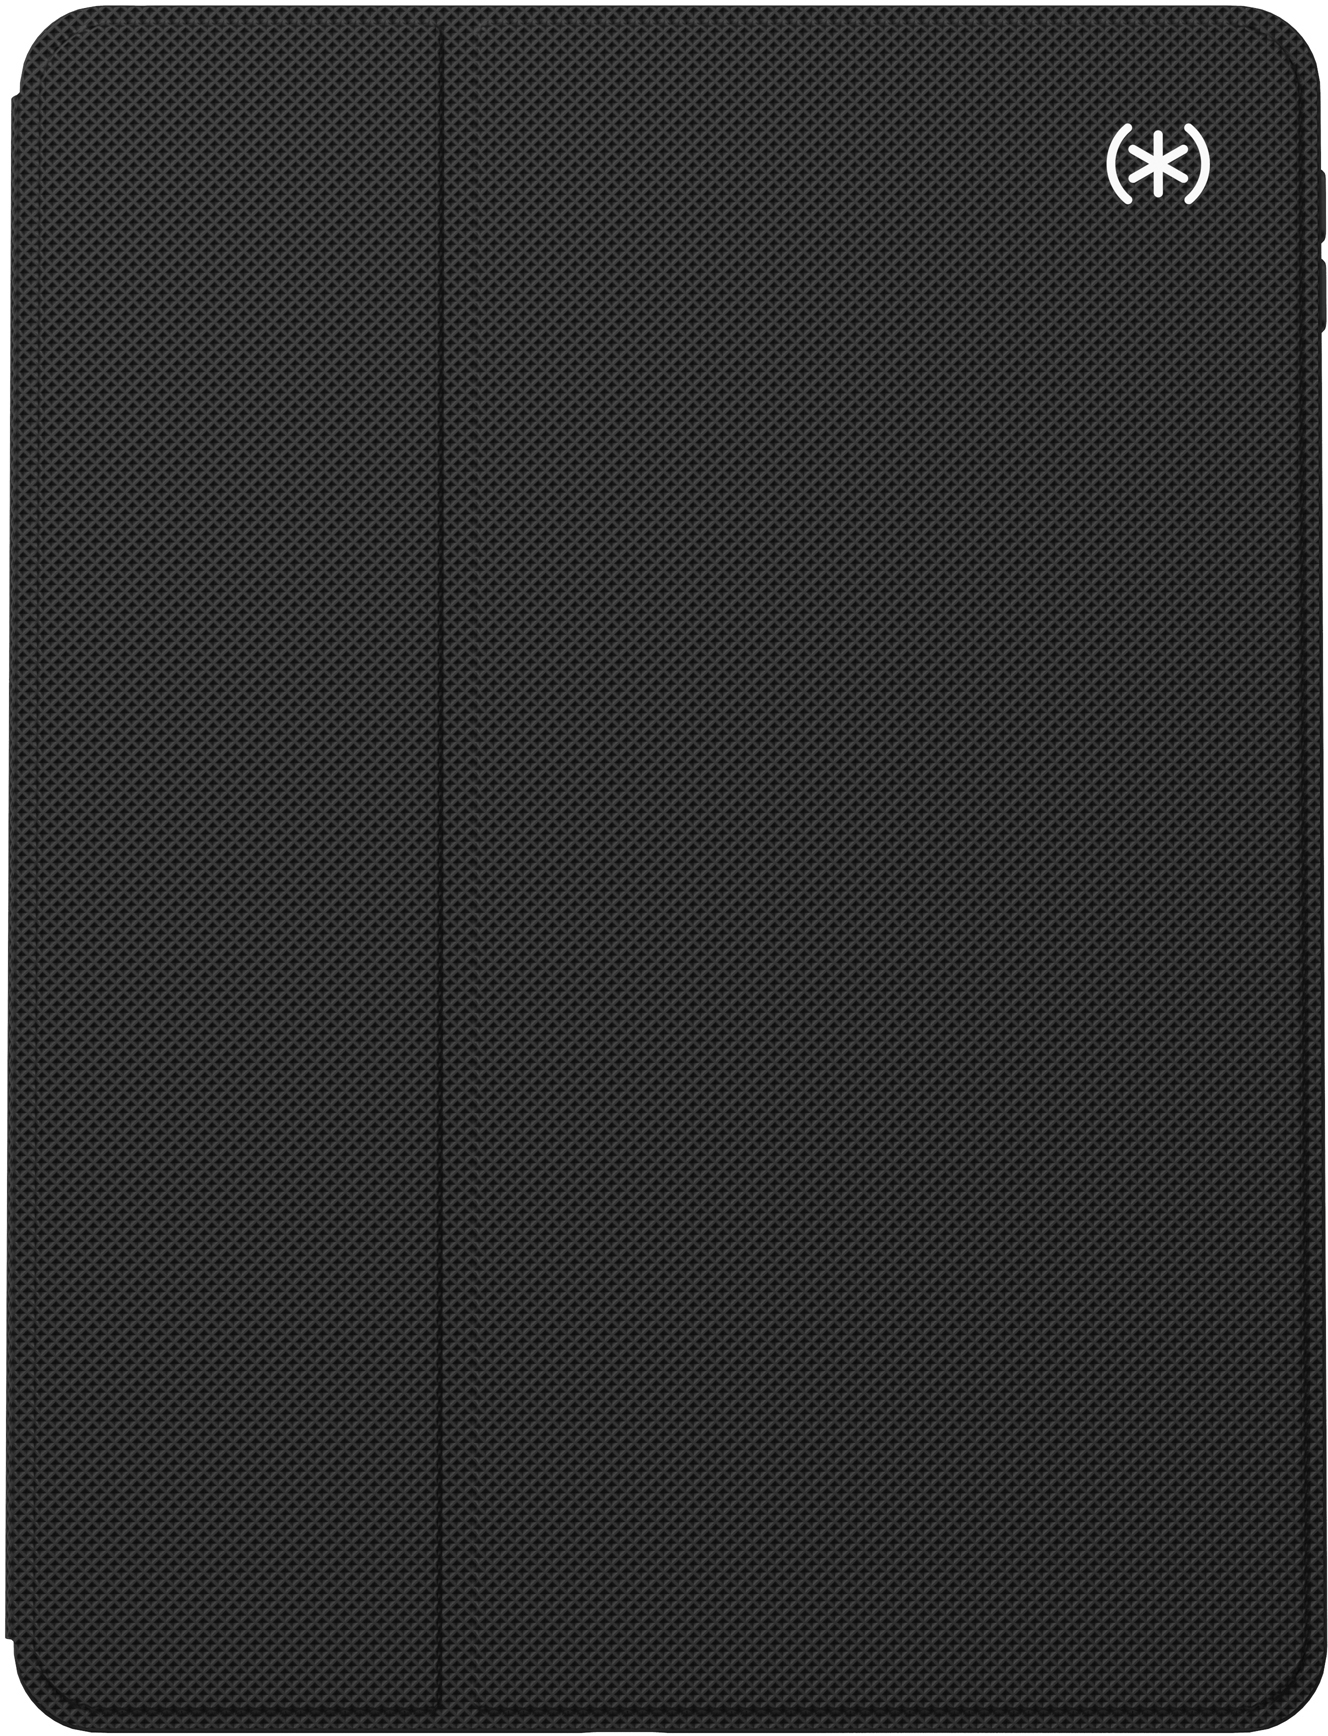 SPECK Presidio Pro Folio MB Black 138656-1050 for iPad (2019/2020), 10.2